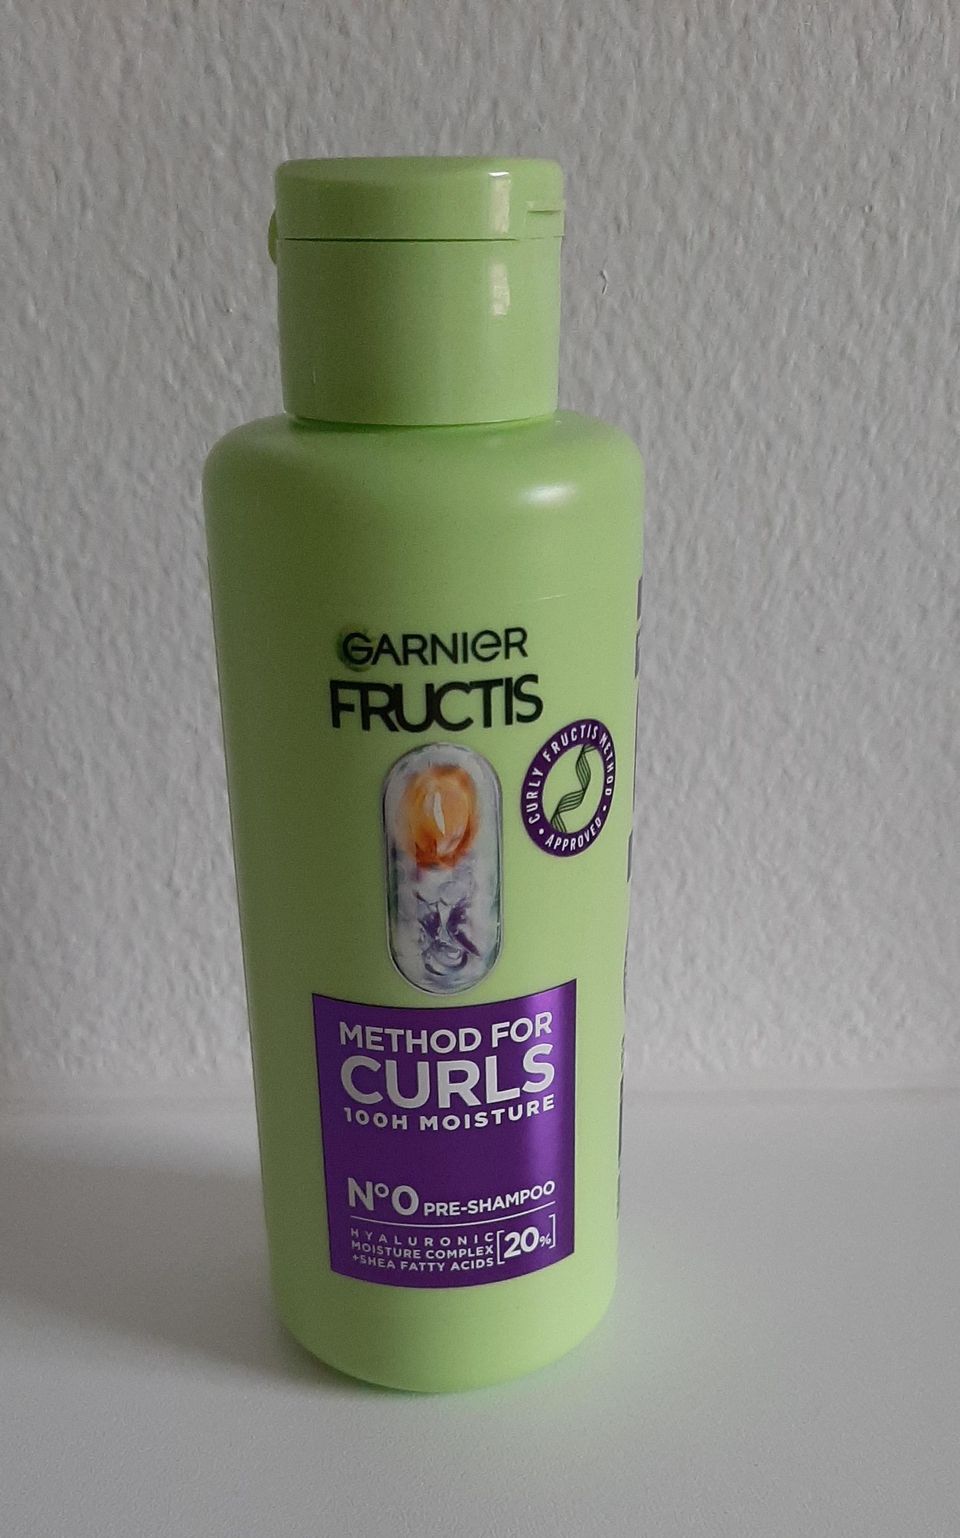 Garnier fructis method for curls